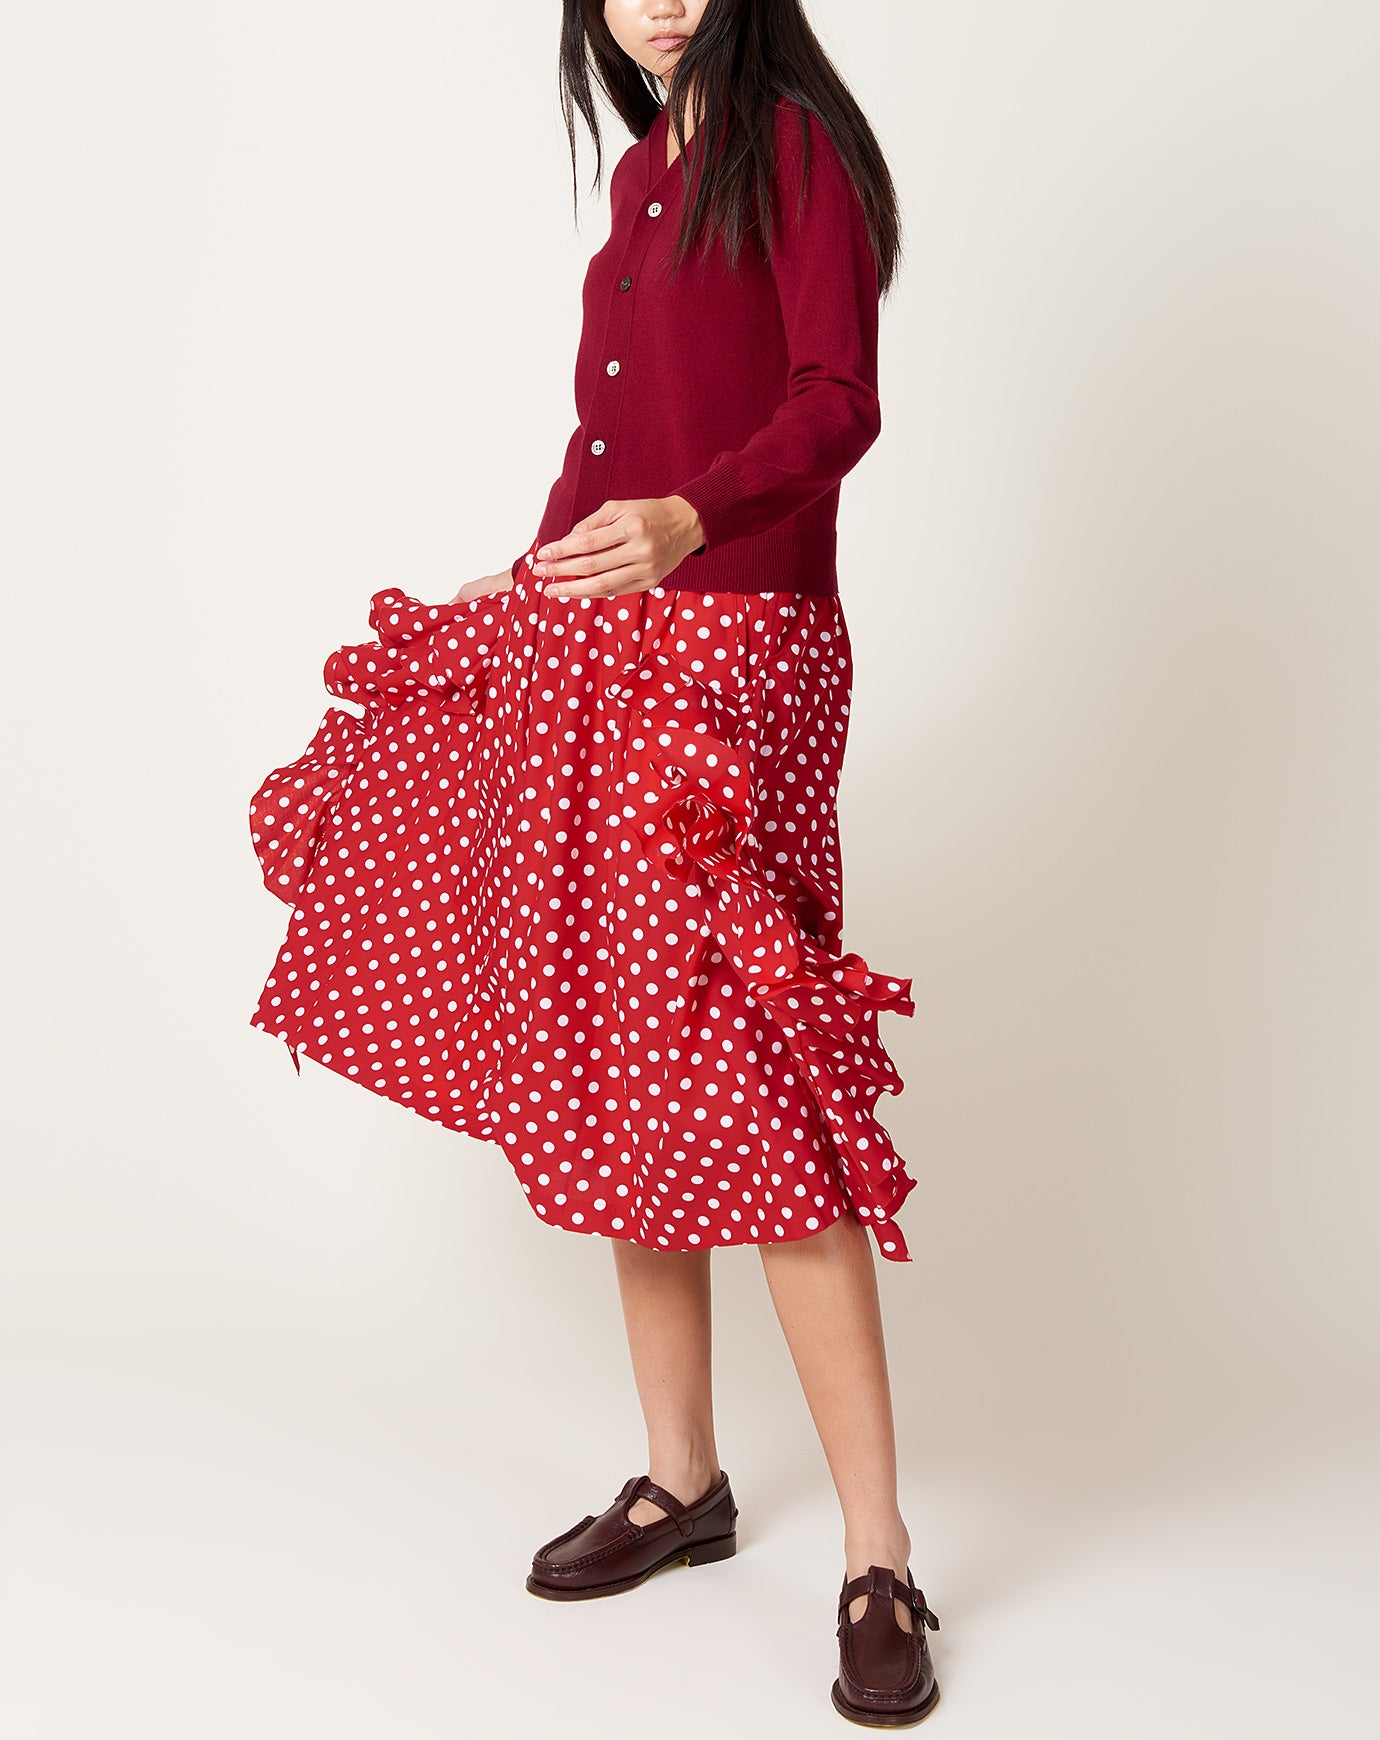 Comme des Garçons Comme des Garçons Broad Polka Dots Skirt in Red and White